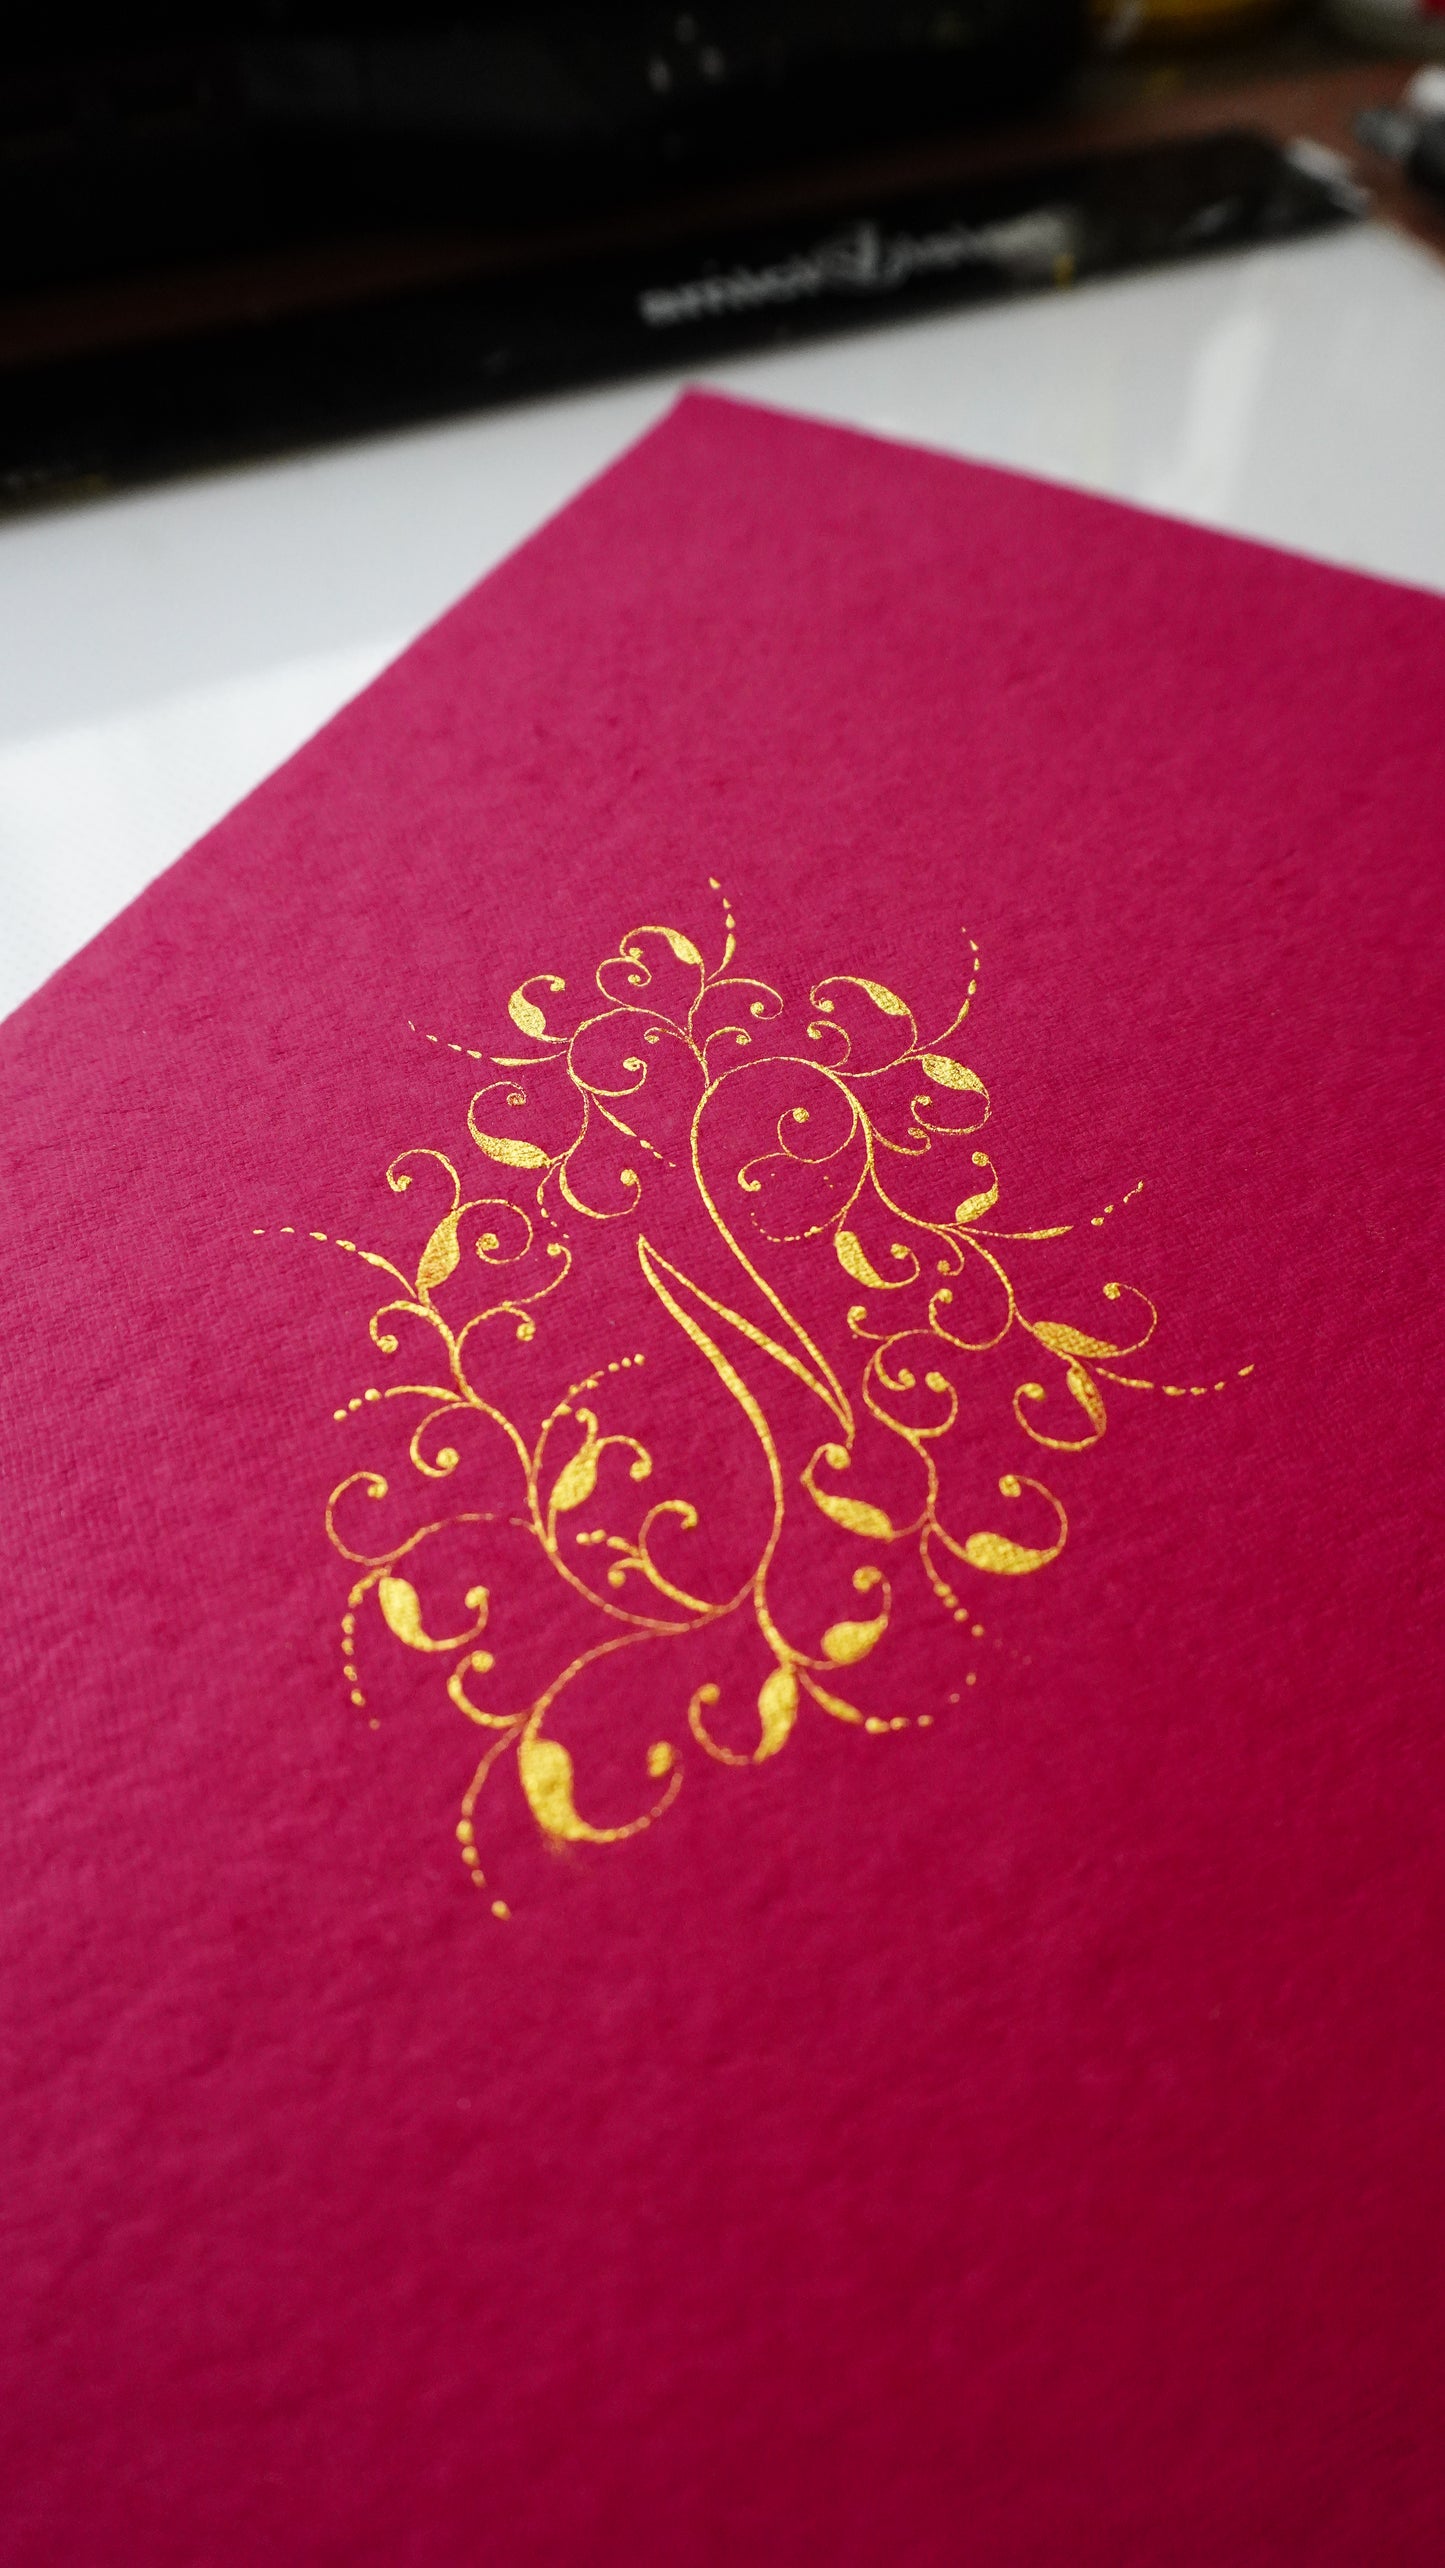 Magenta pink envelope with card